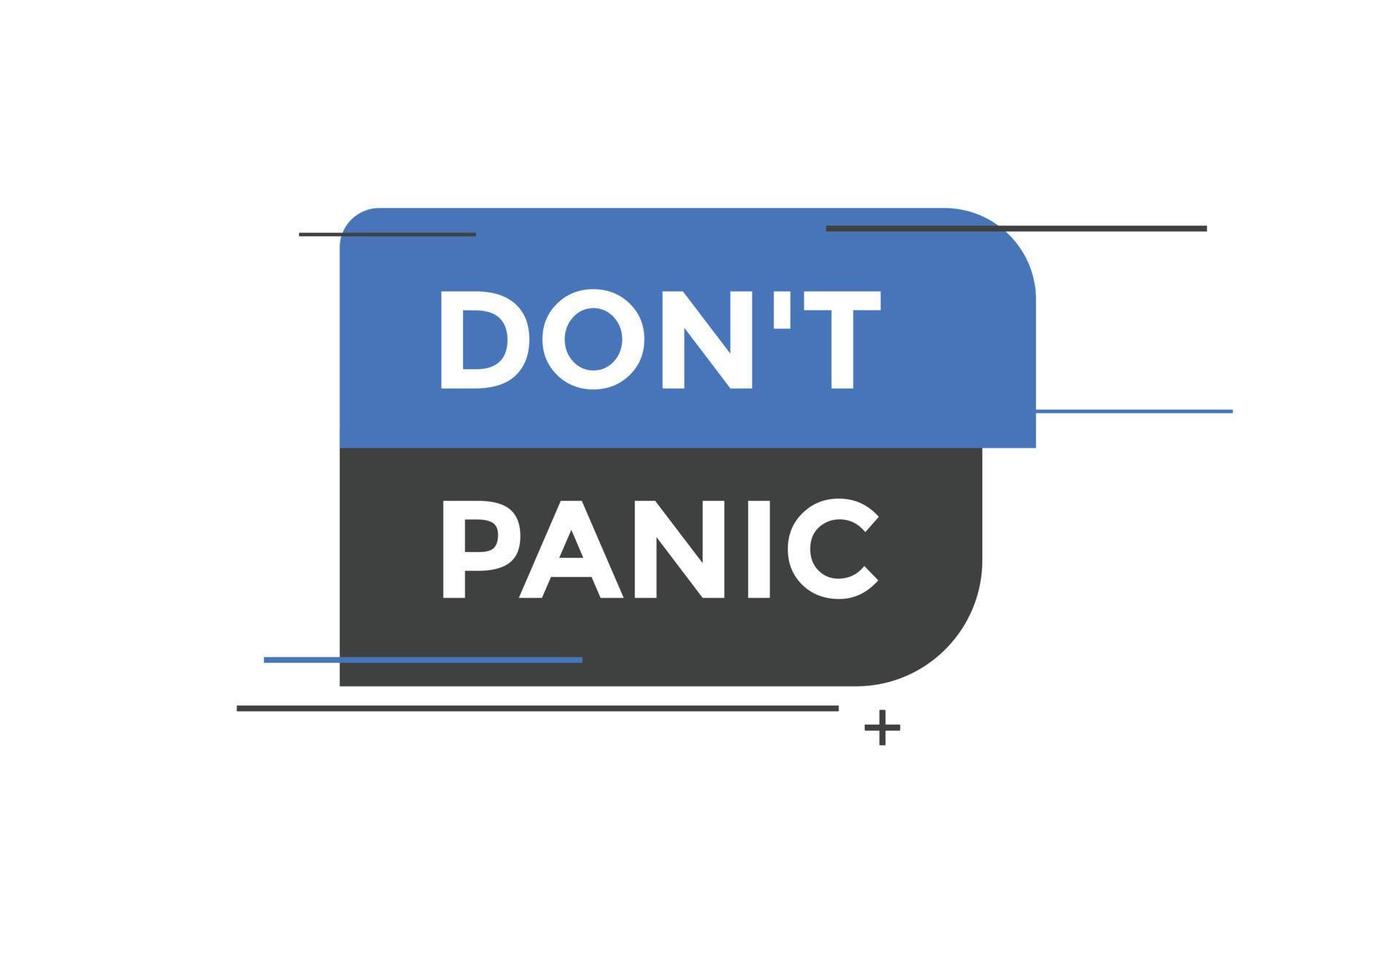 Dont panic button. Dont panic Colorful label sign template. speech bubble vector